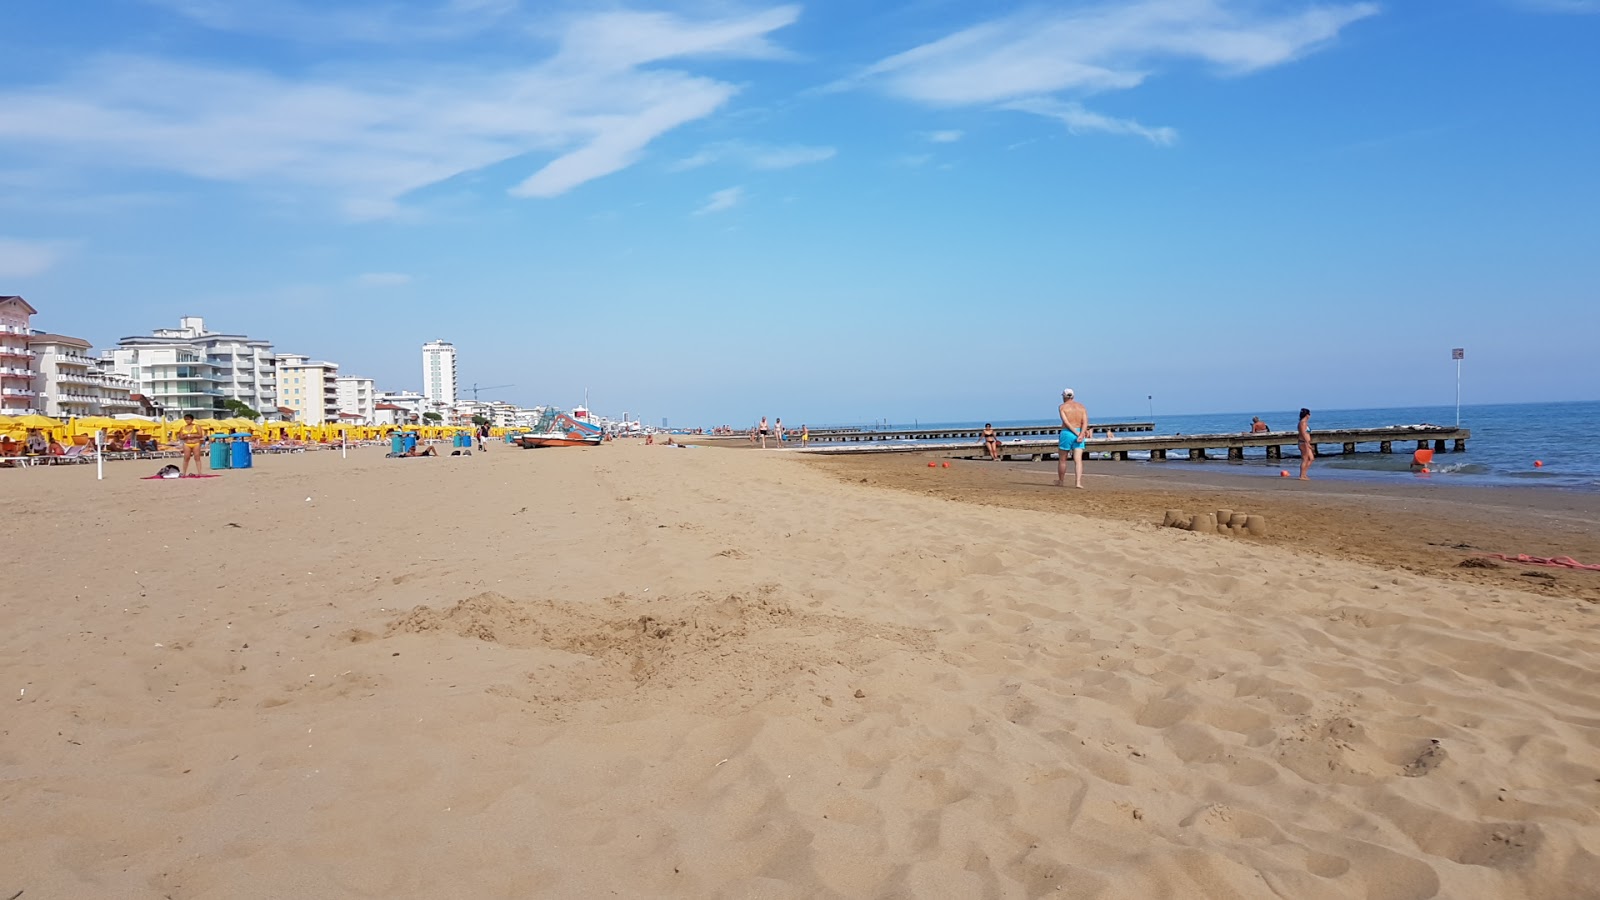 Foto de Spiaggia di Jesolo - lugar popular entre os apreciadores de relaxamento